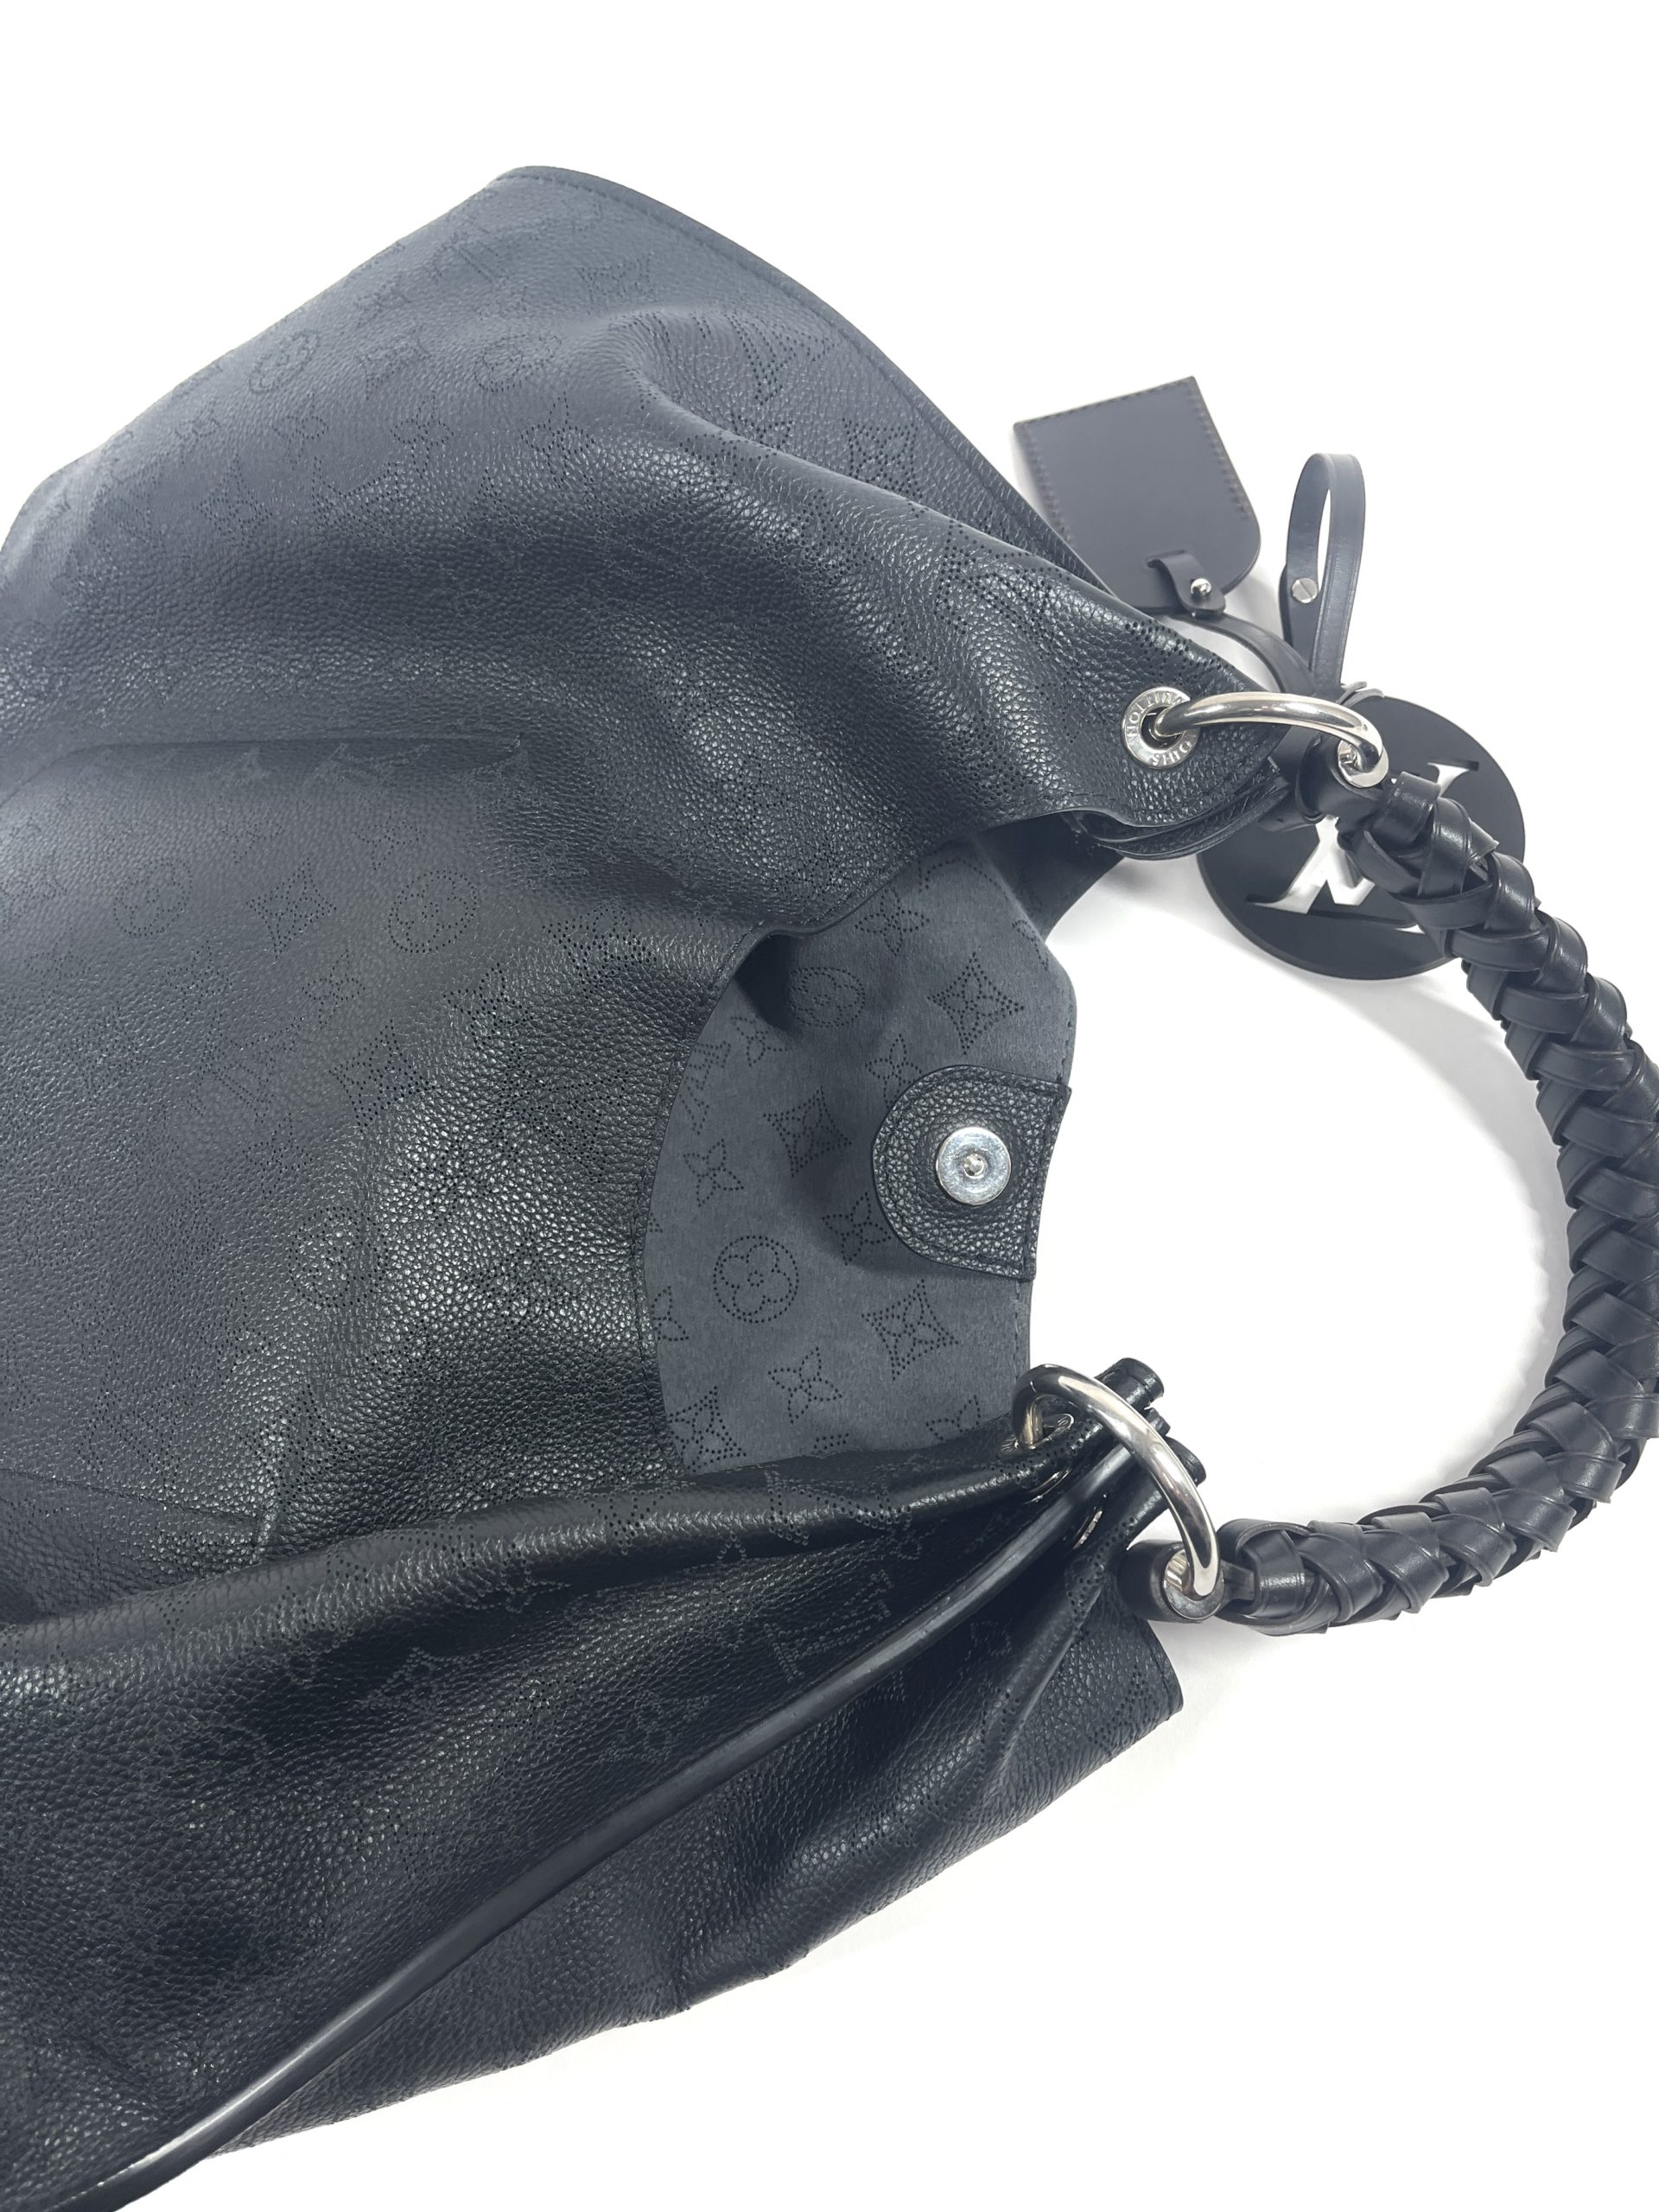 Carmel Mahina Leather - Handbags